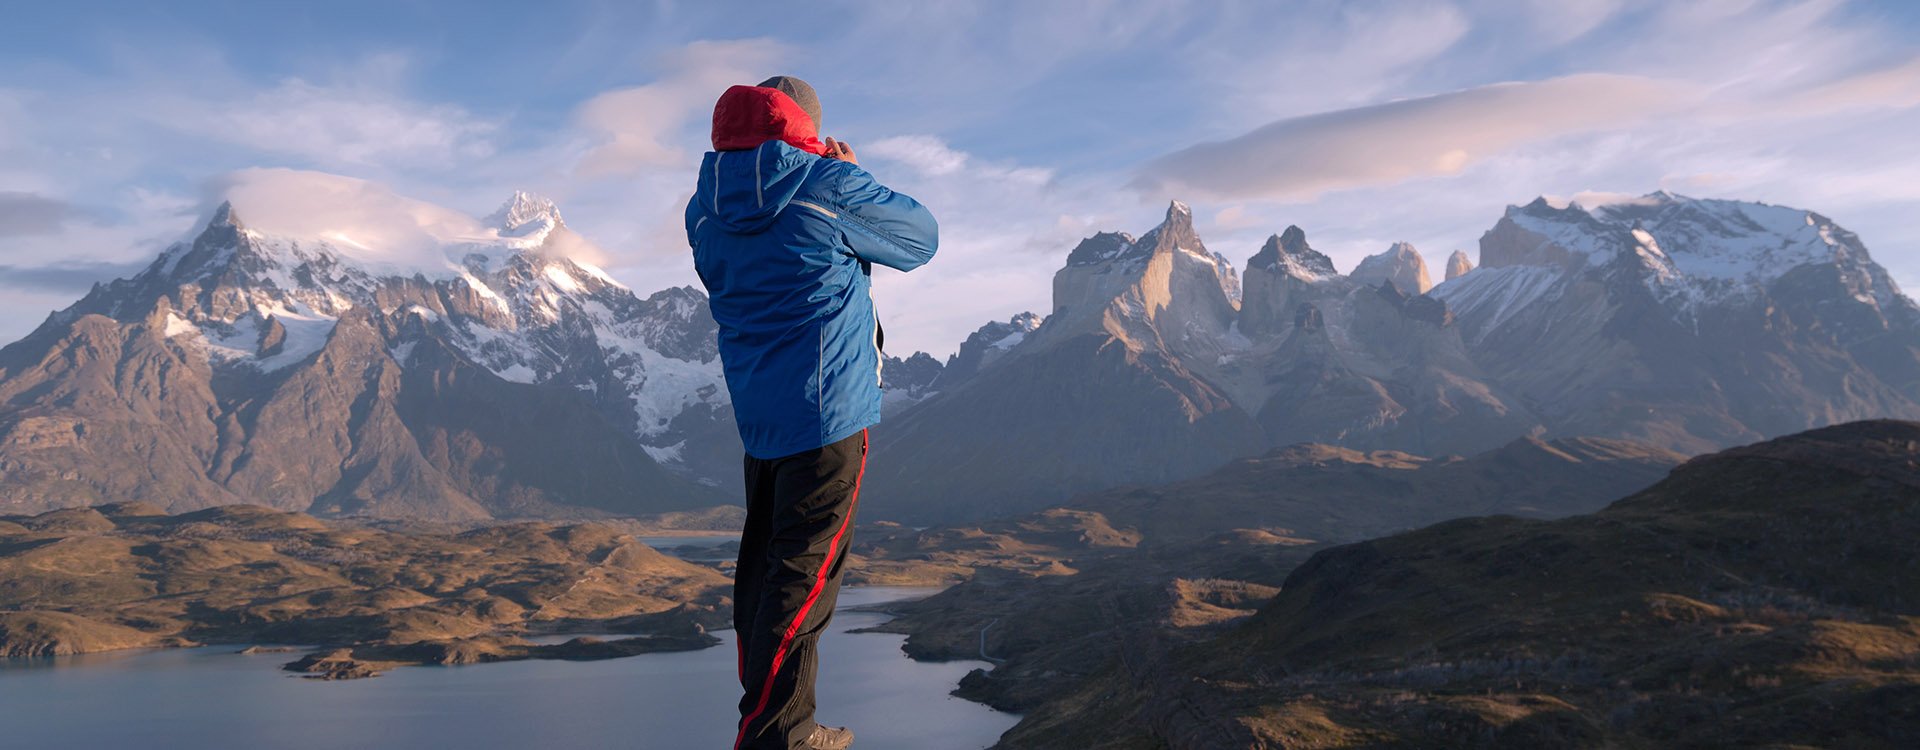 Man stood on rock photographing Los Cuernos Patagonia